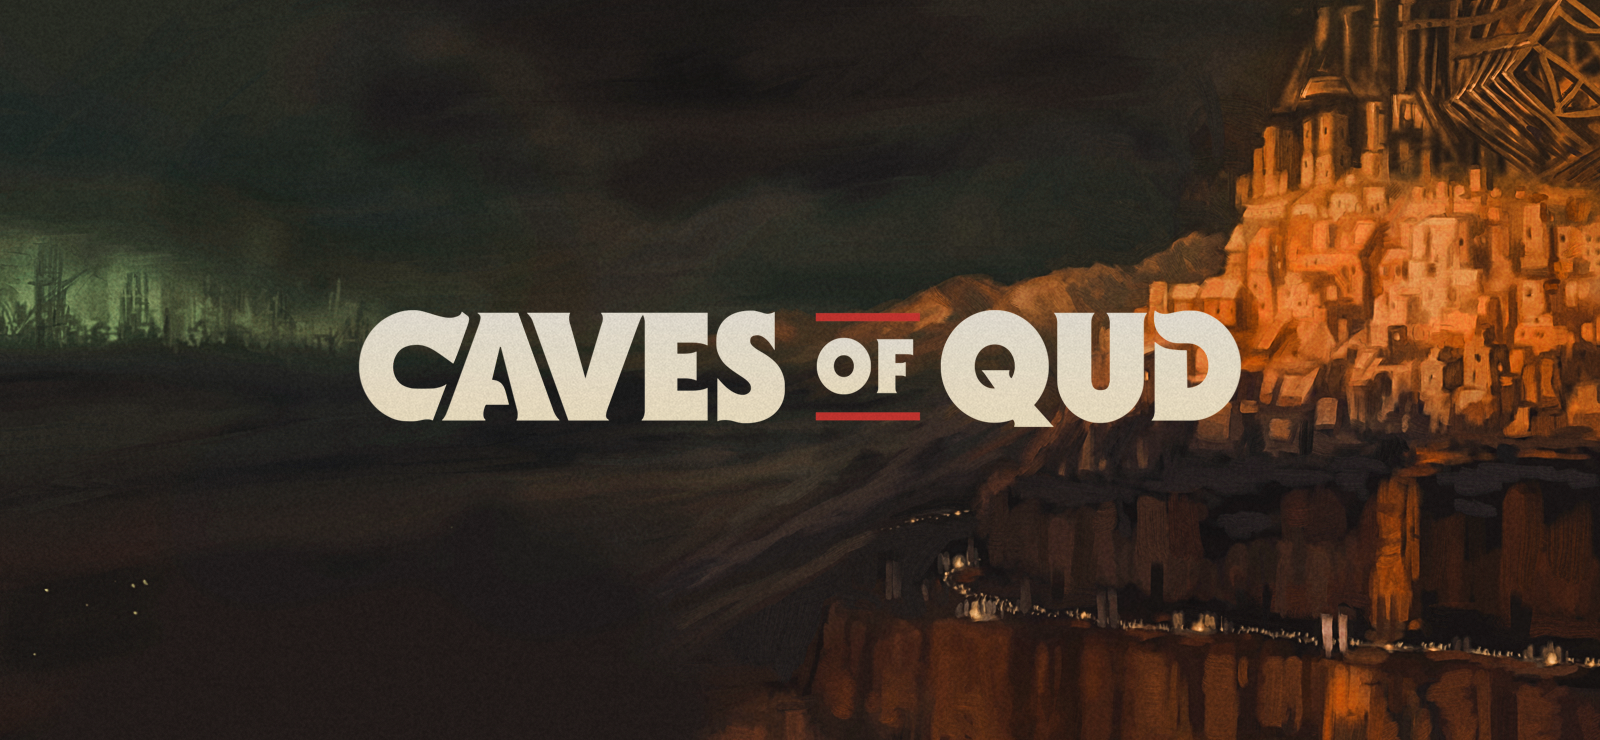 Caves Of Qud